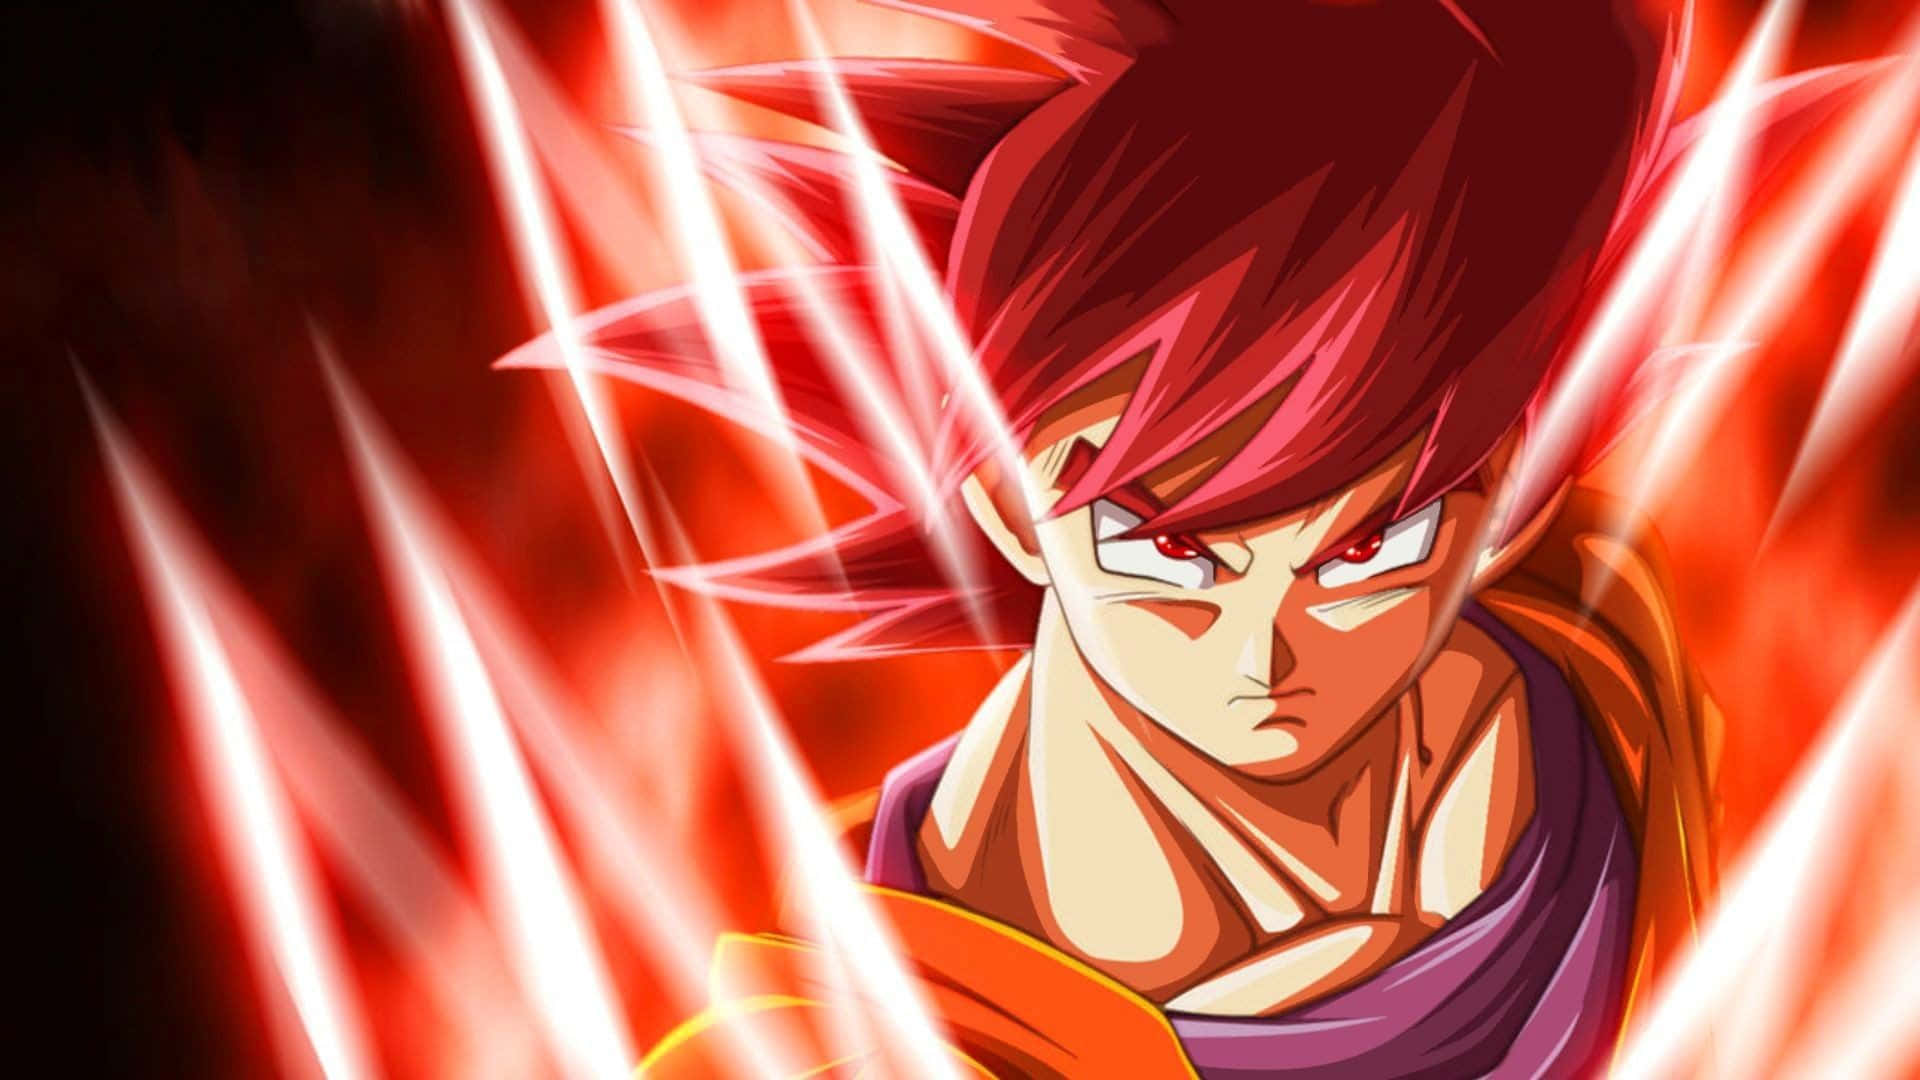 "Goku in Super Saiyan 4 form, ready to fight!" Wallpaper